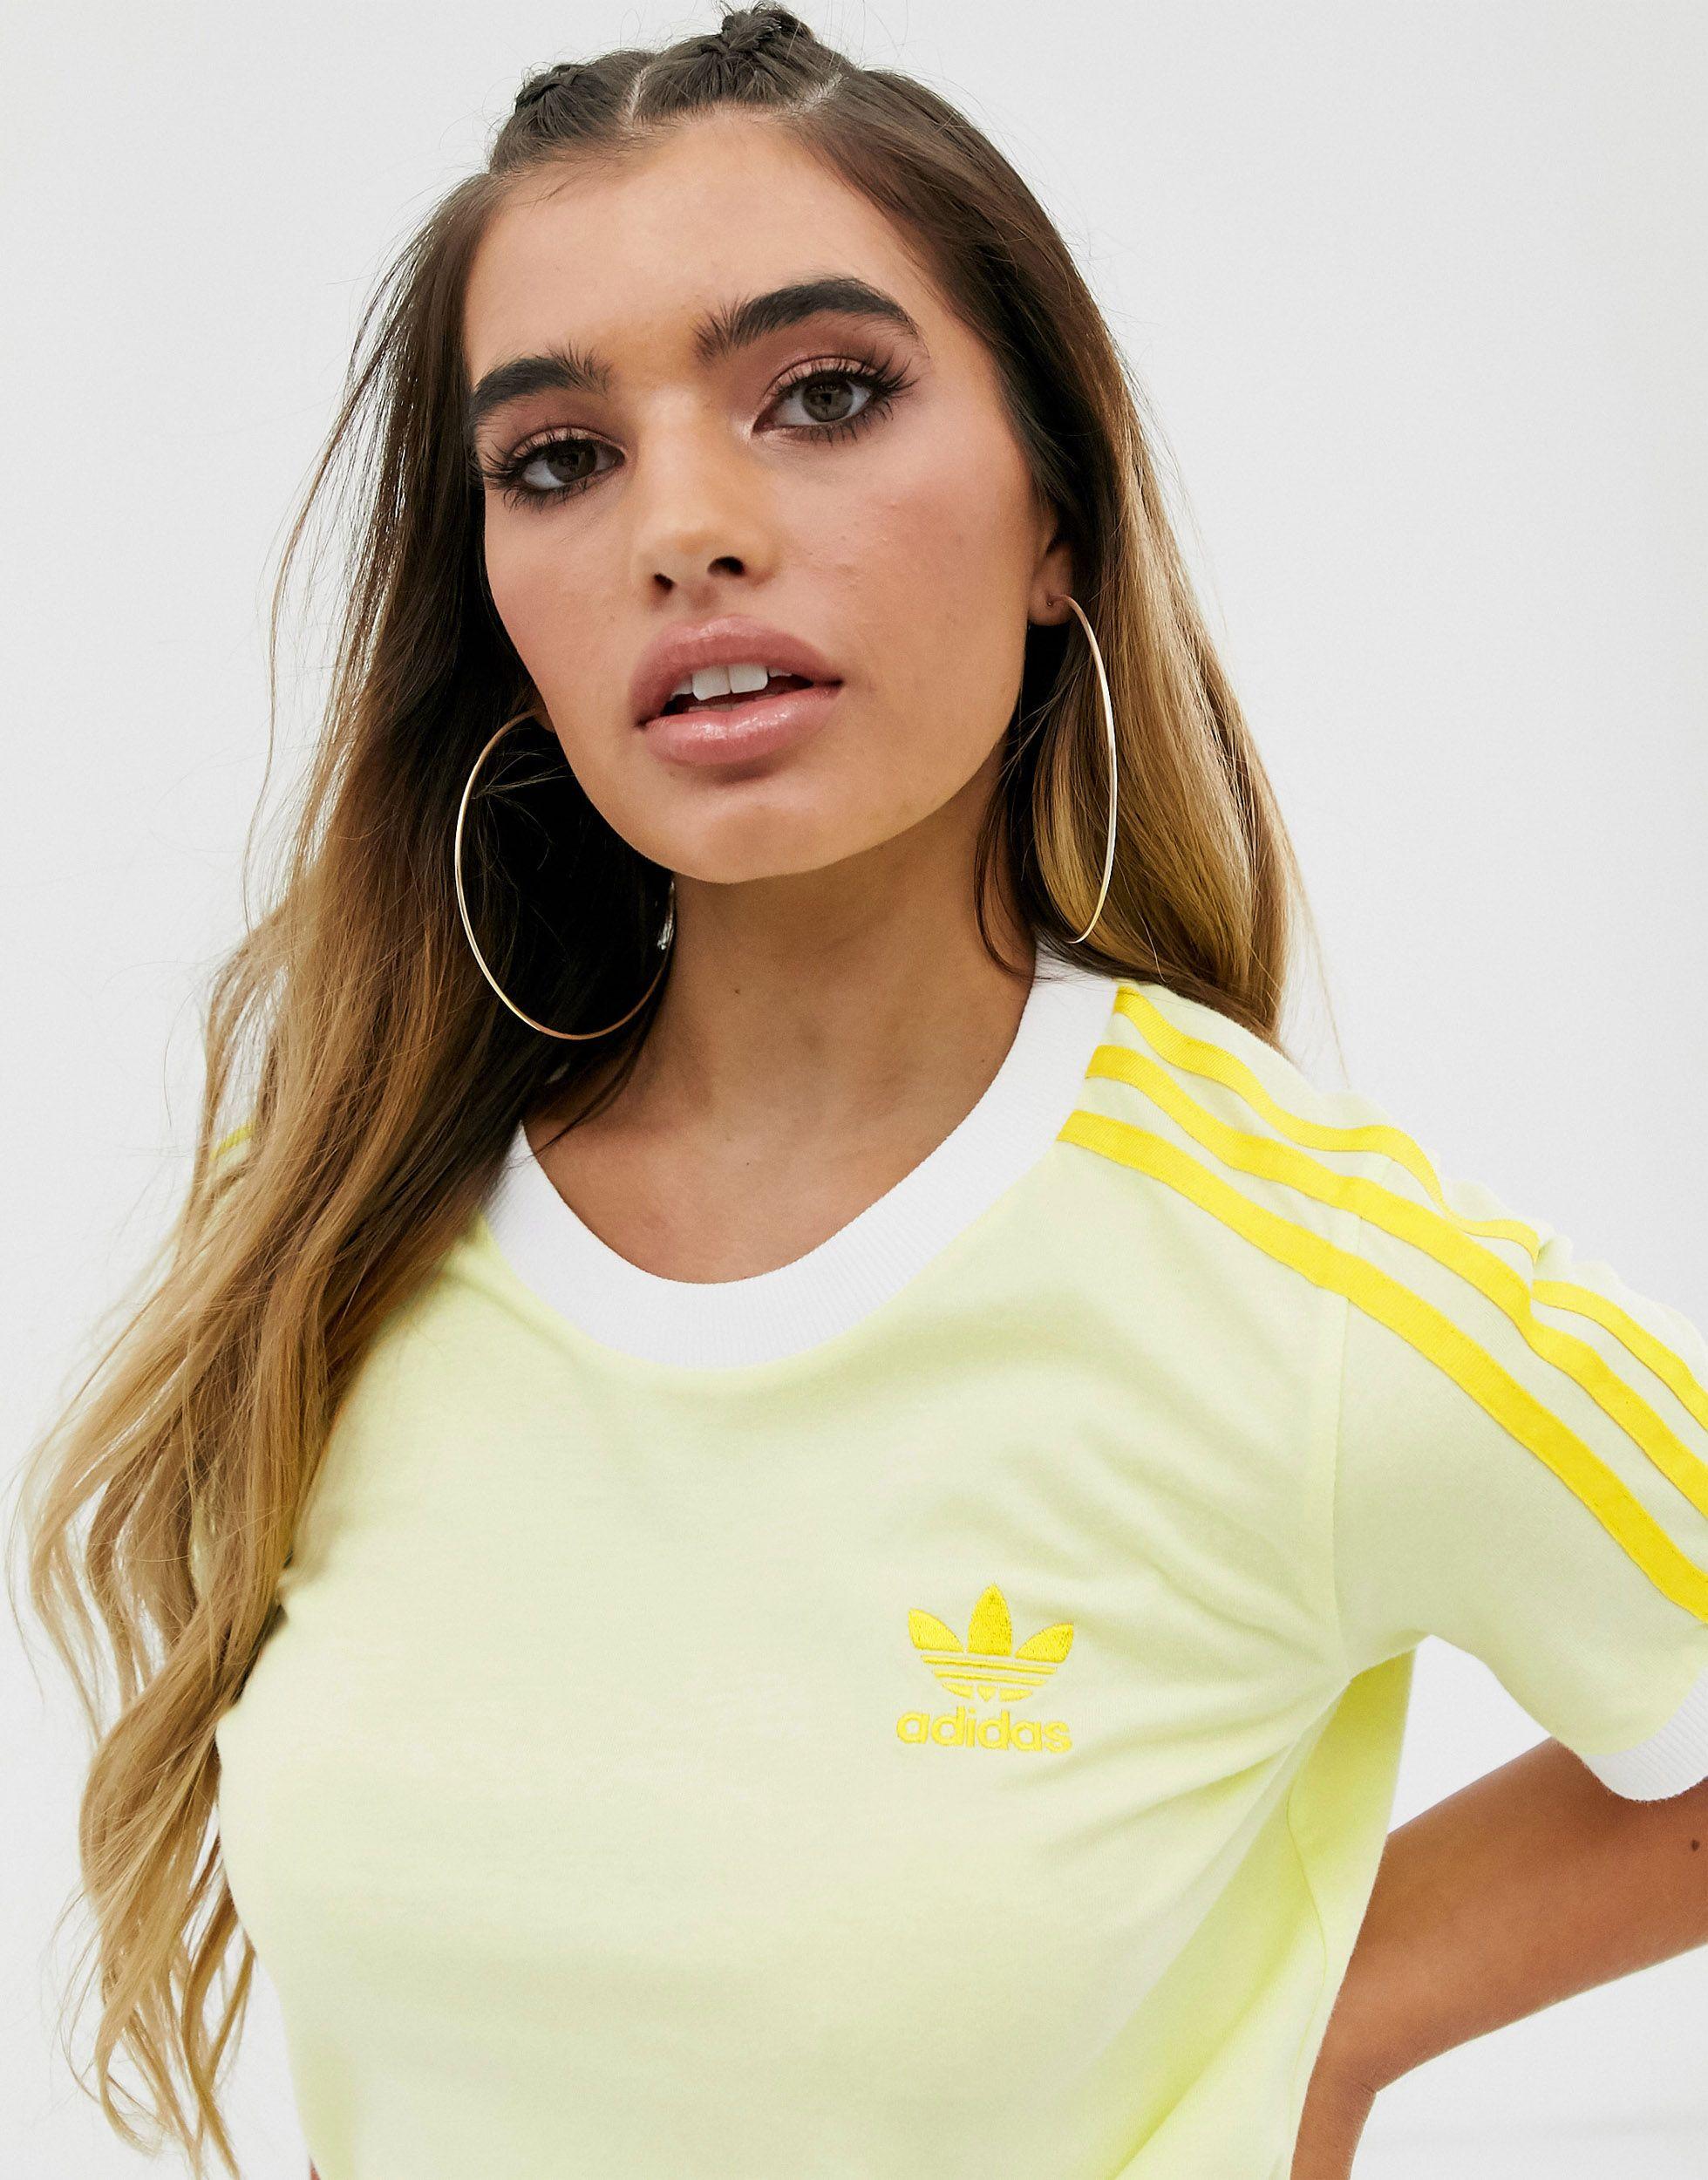 Buy > adidas yellow t shirt women's > in stock